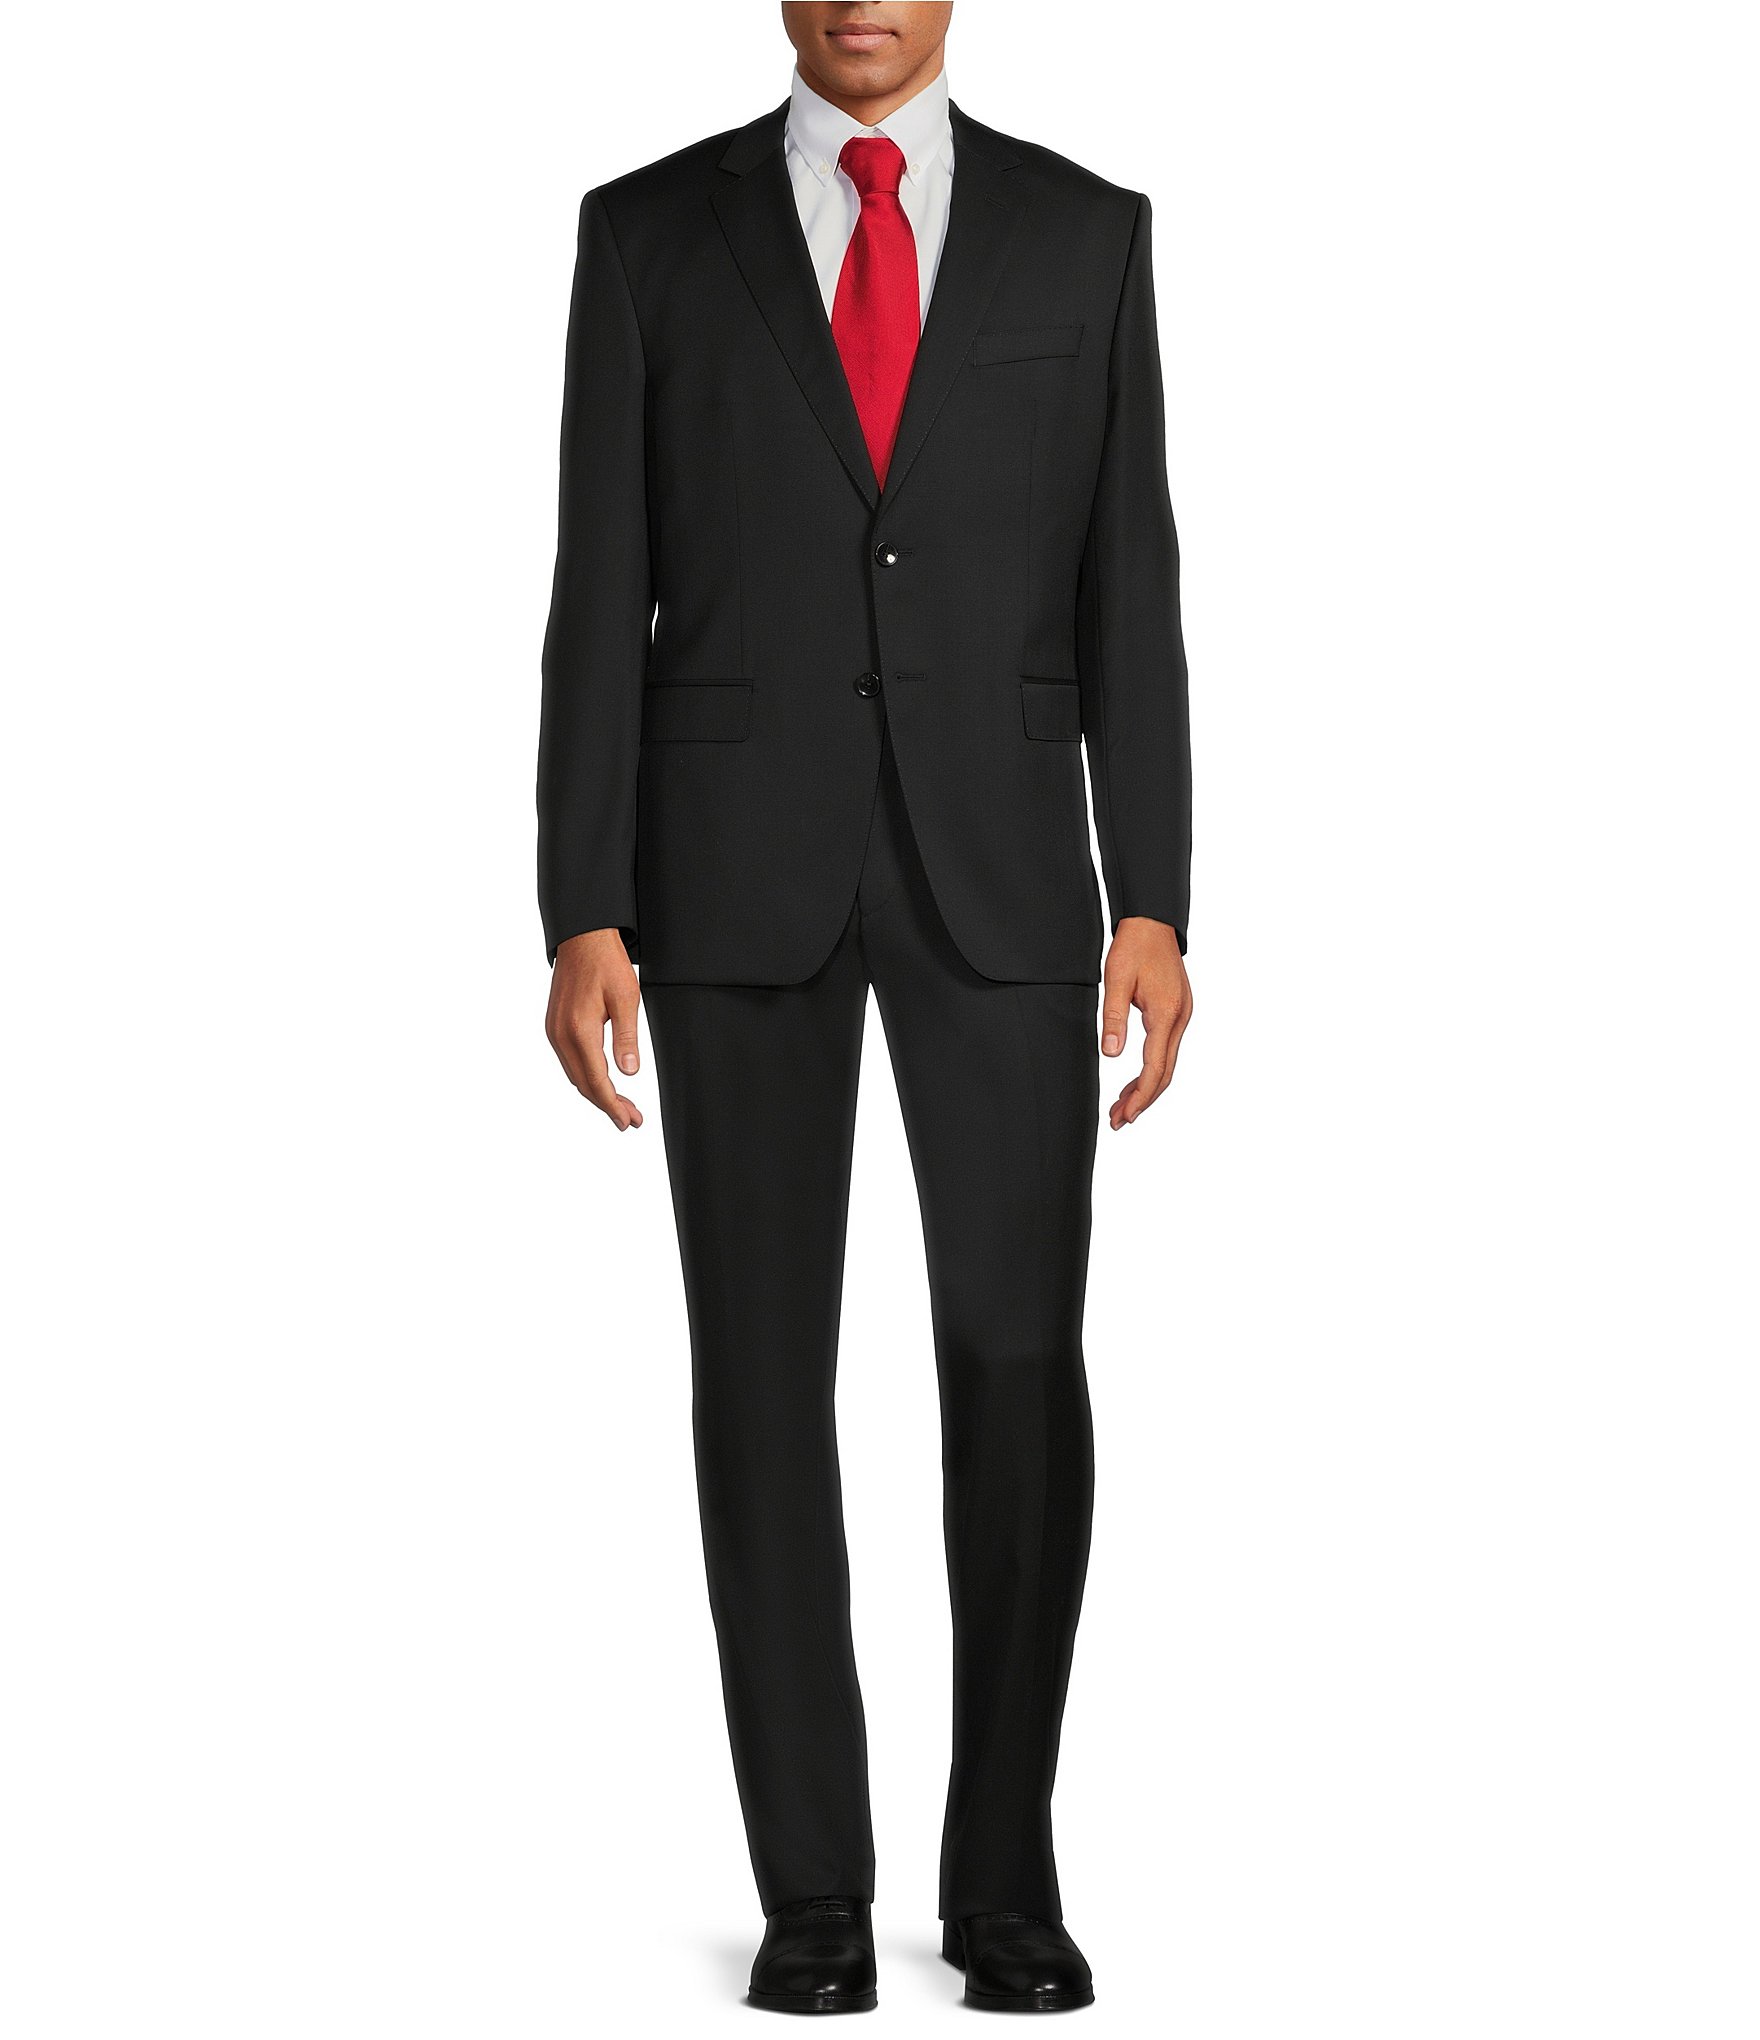 de acuerdo a nostalgia Noroeste Hugo Boss Slim Fit Flat Front 2-Piece Suit | Dillard's